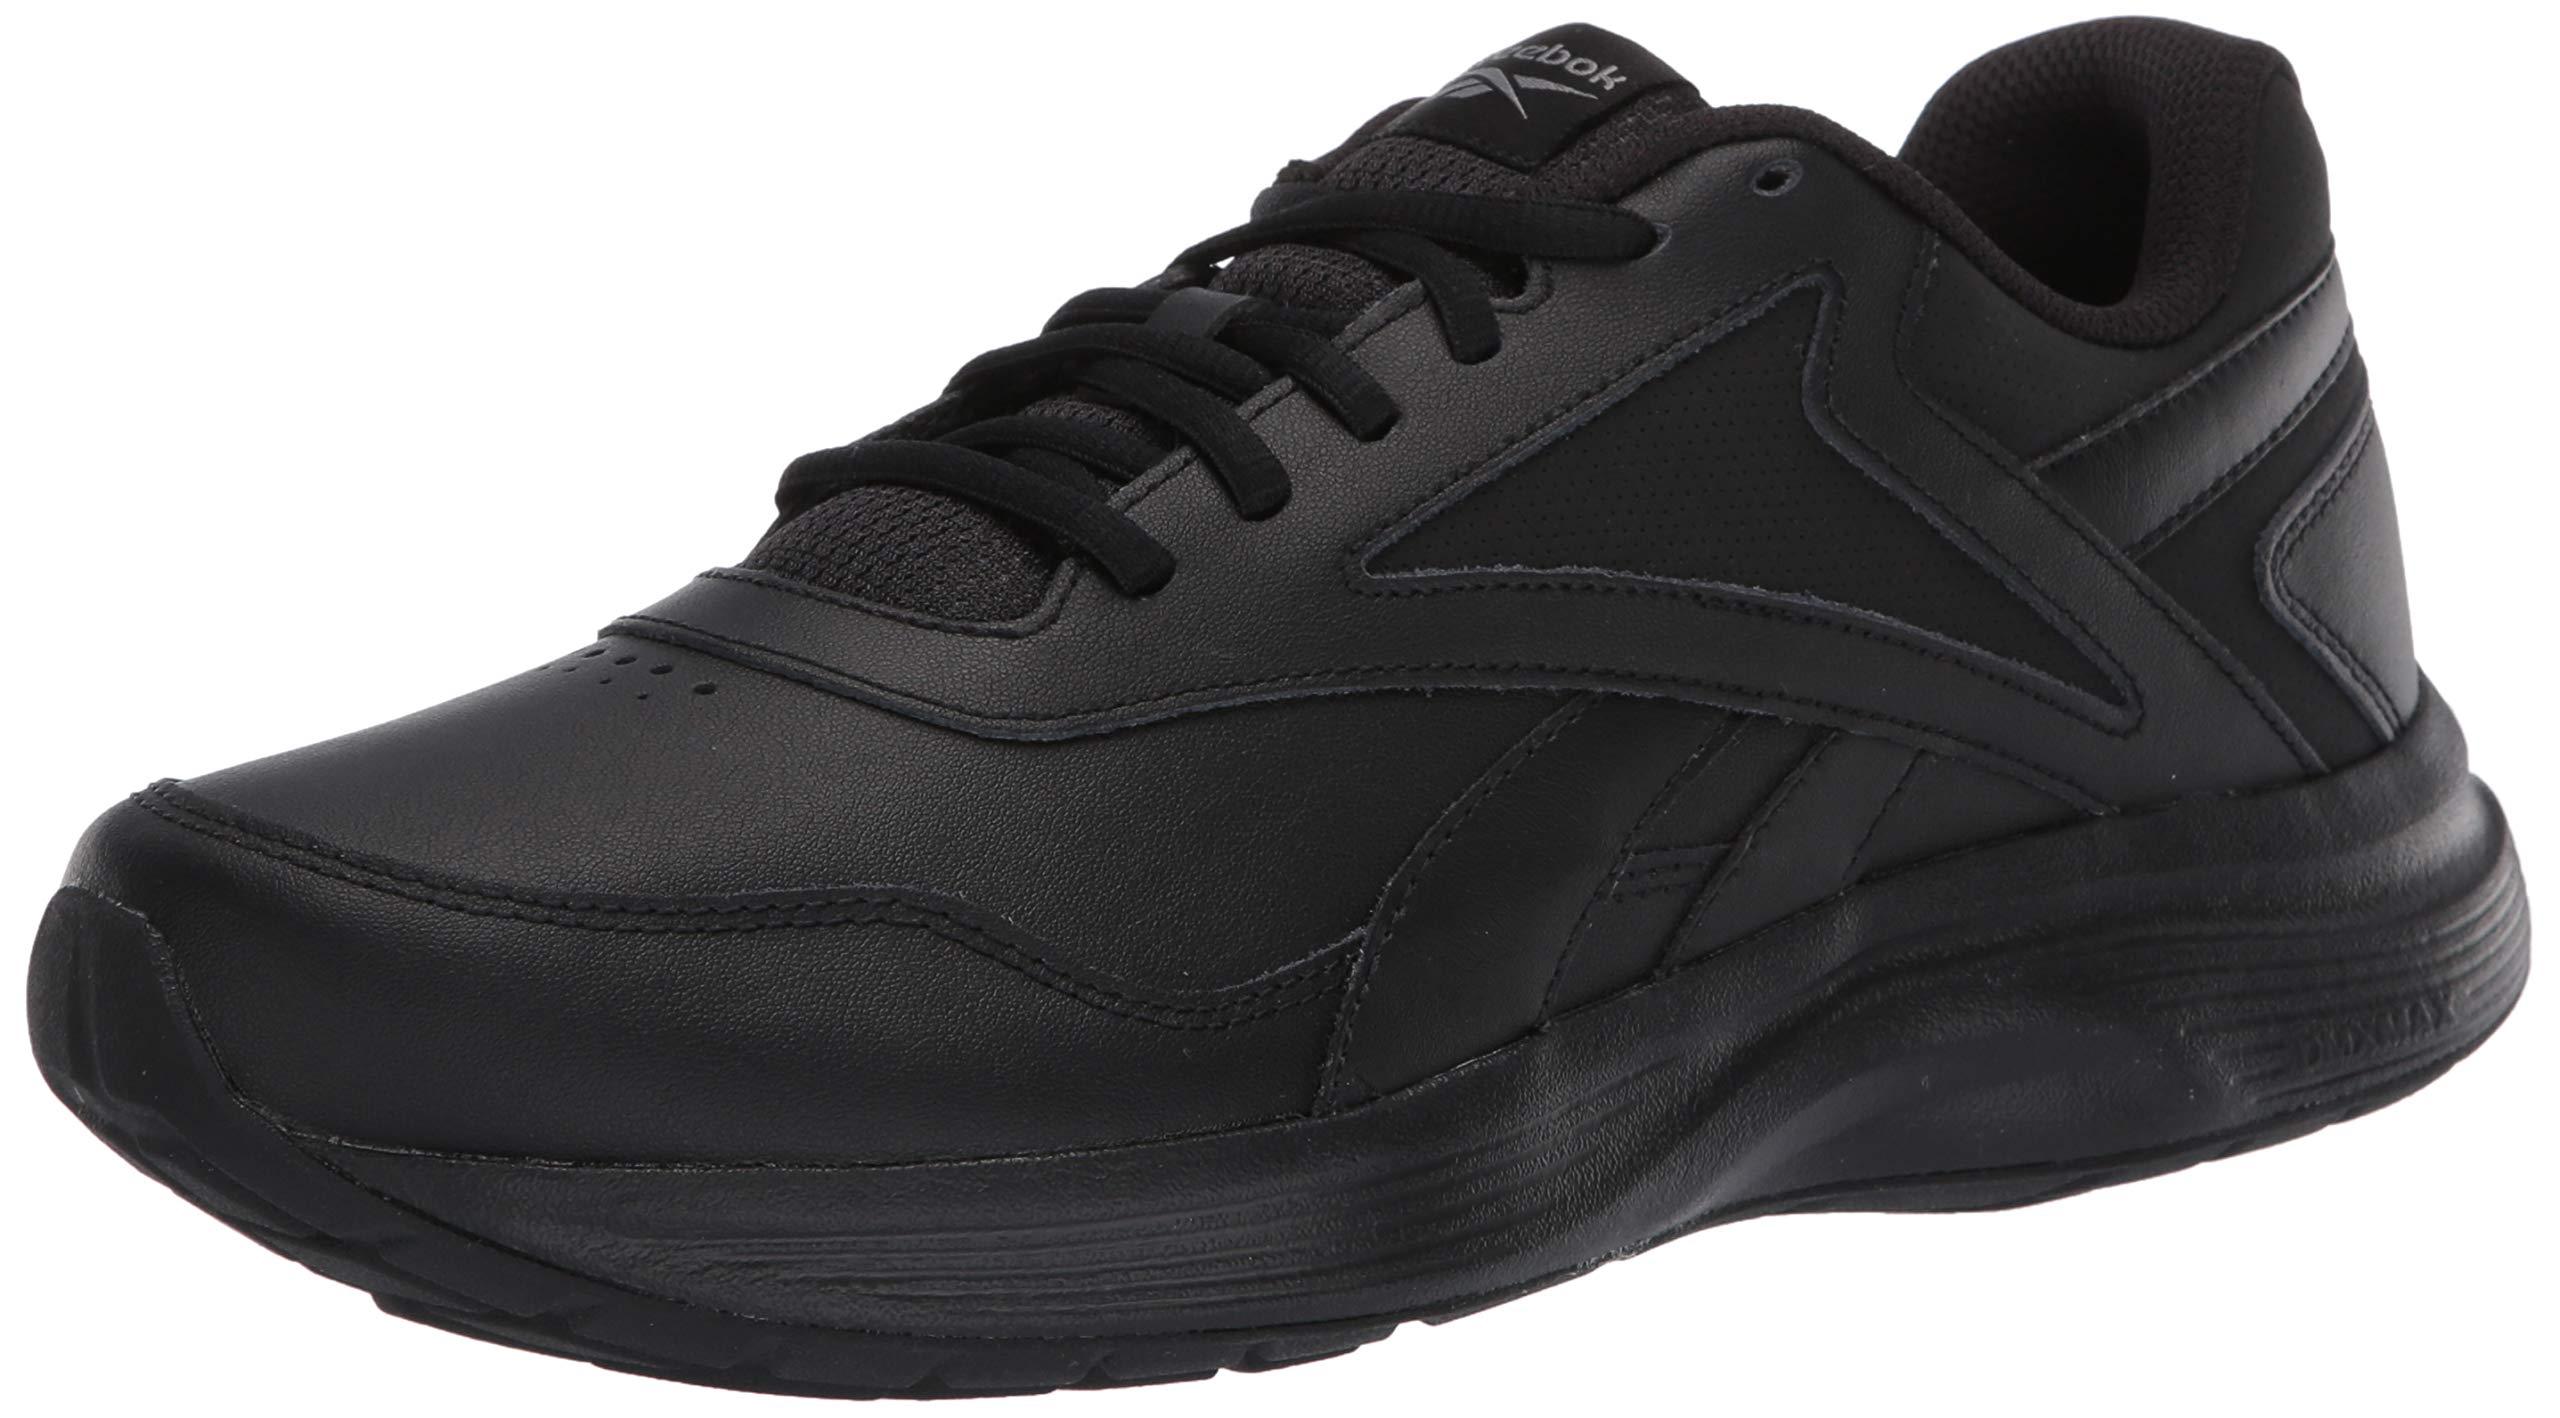 Reebok Leather Walk Ultra 7 Dmx Max Shoe in Black for Men - Save 31% - Lyst